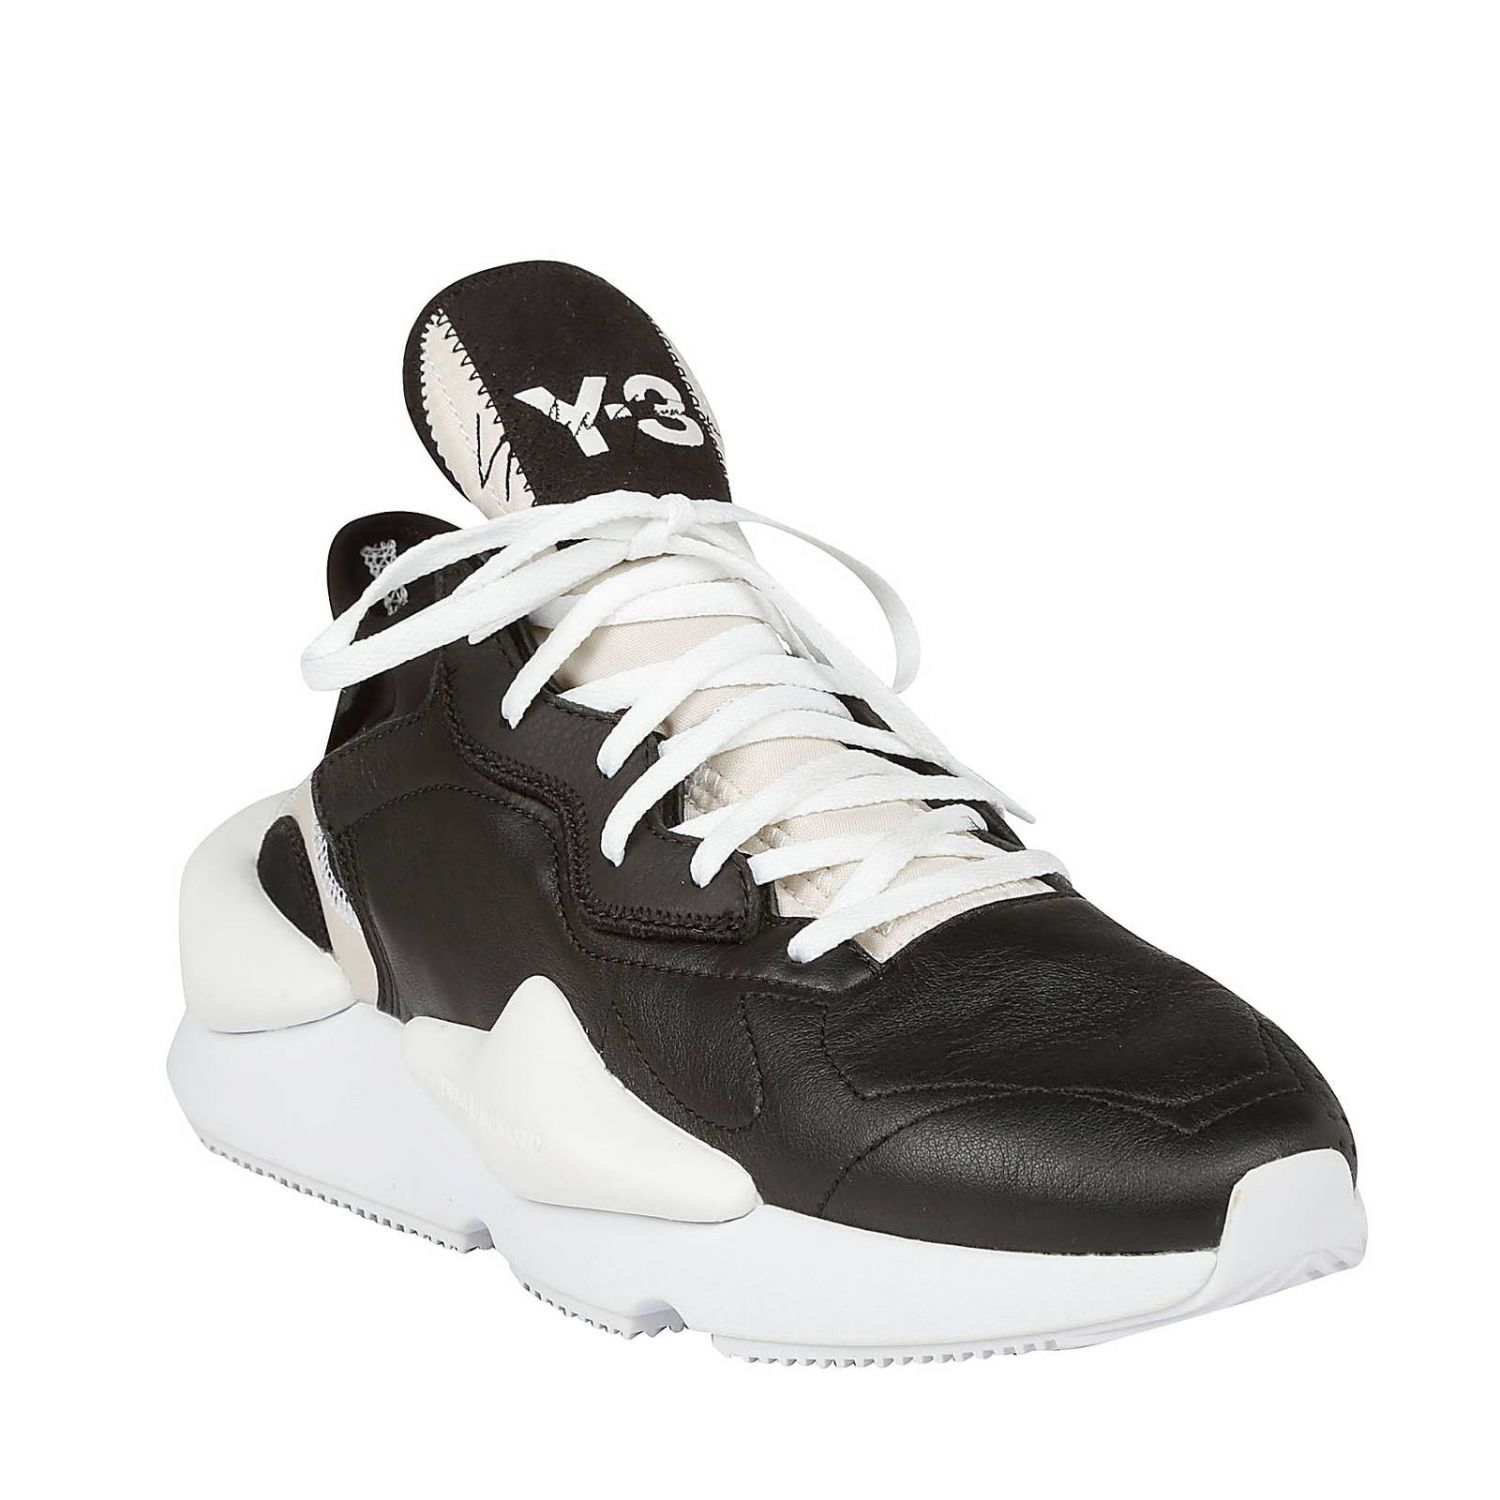 Yohji Yamamoto Outlet: Sneakers men Y3 - Black | Sneakers Yohji